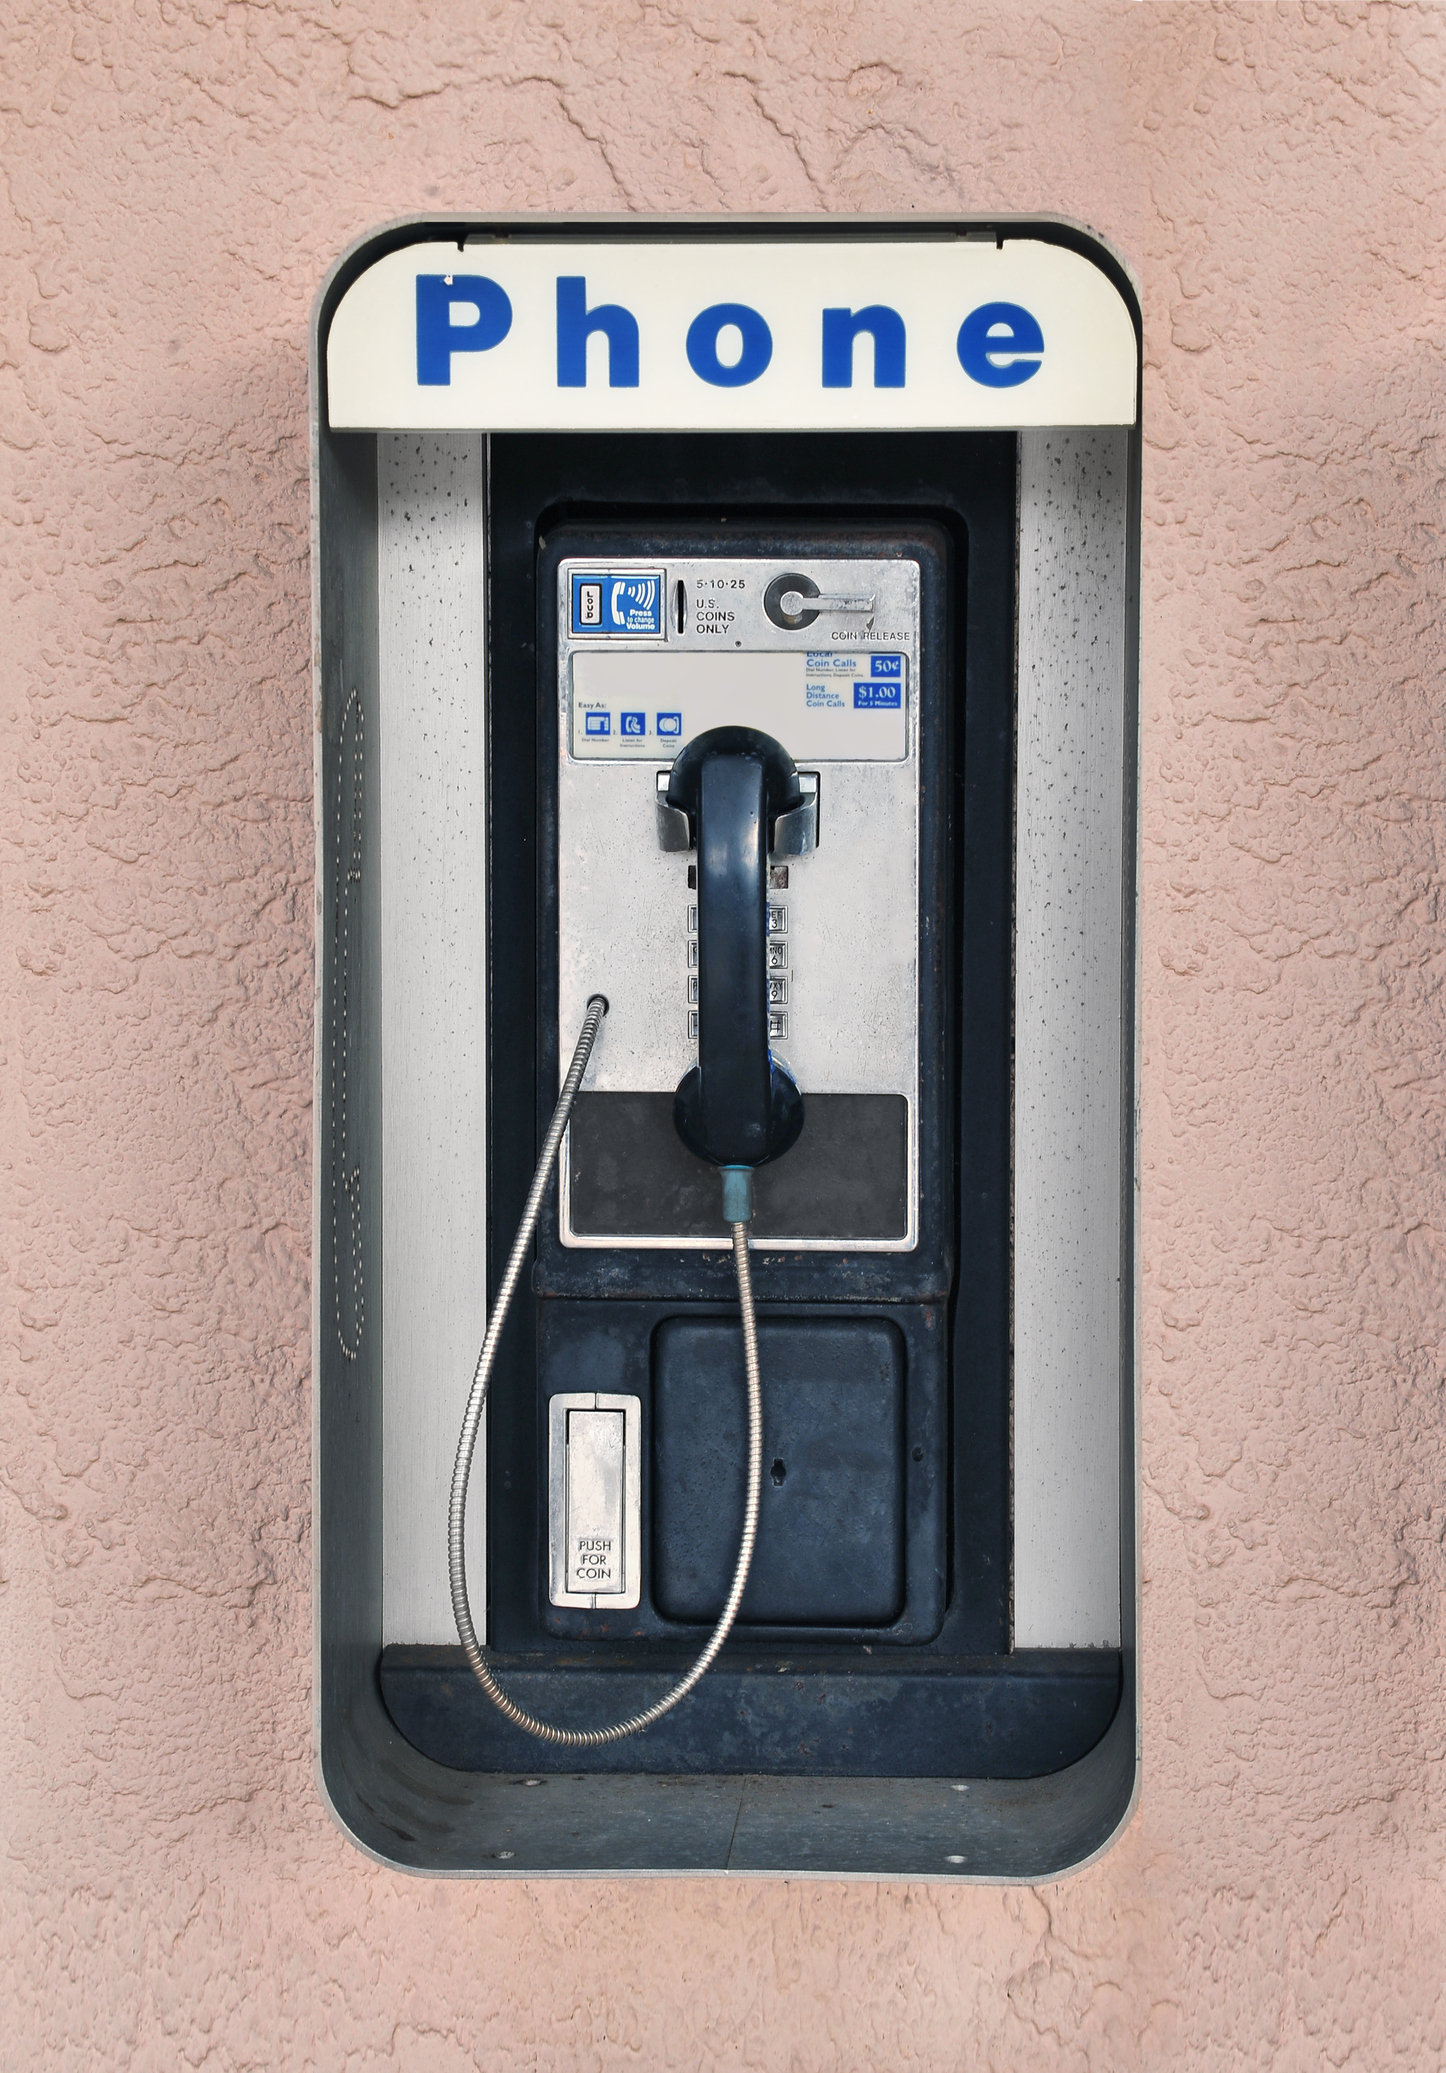 a pay phone